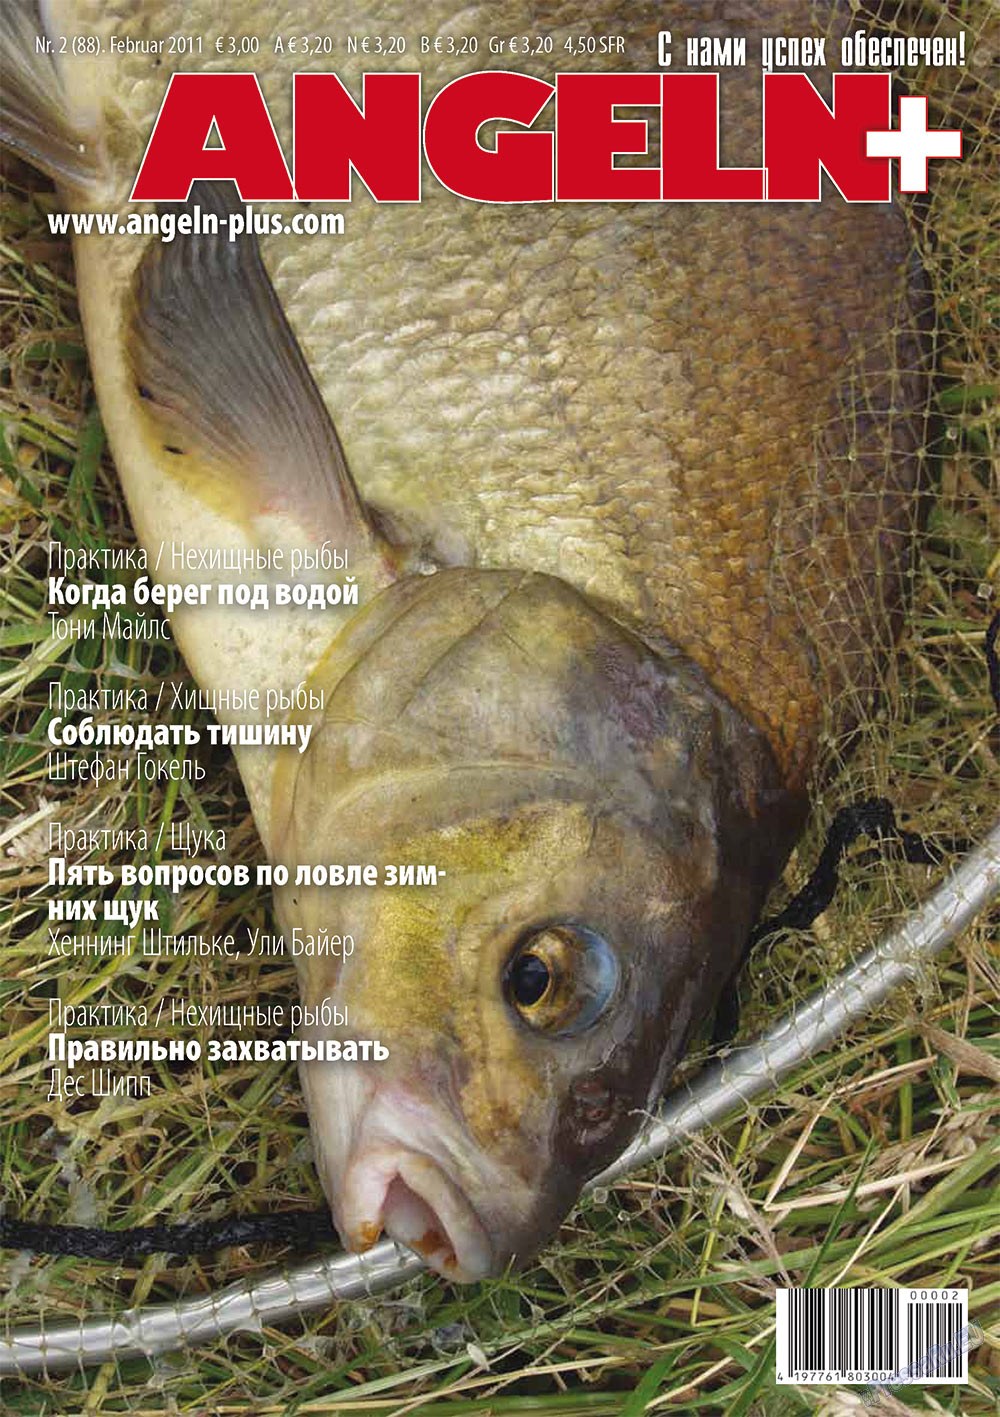 Рыбалка Plus (журнал). 2011 год, номер 2, стр. 1